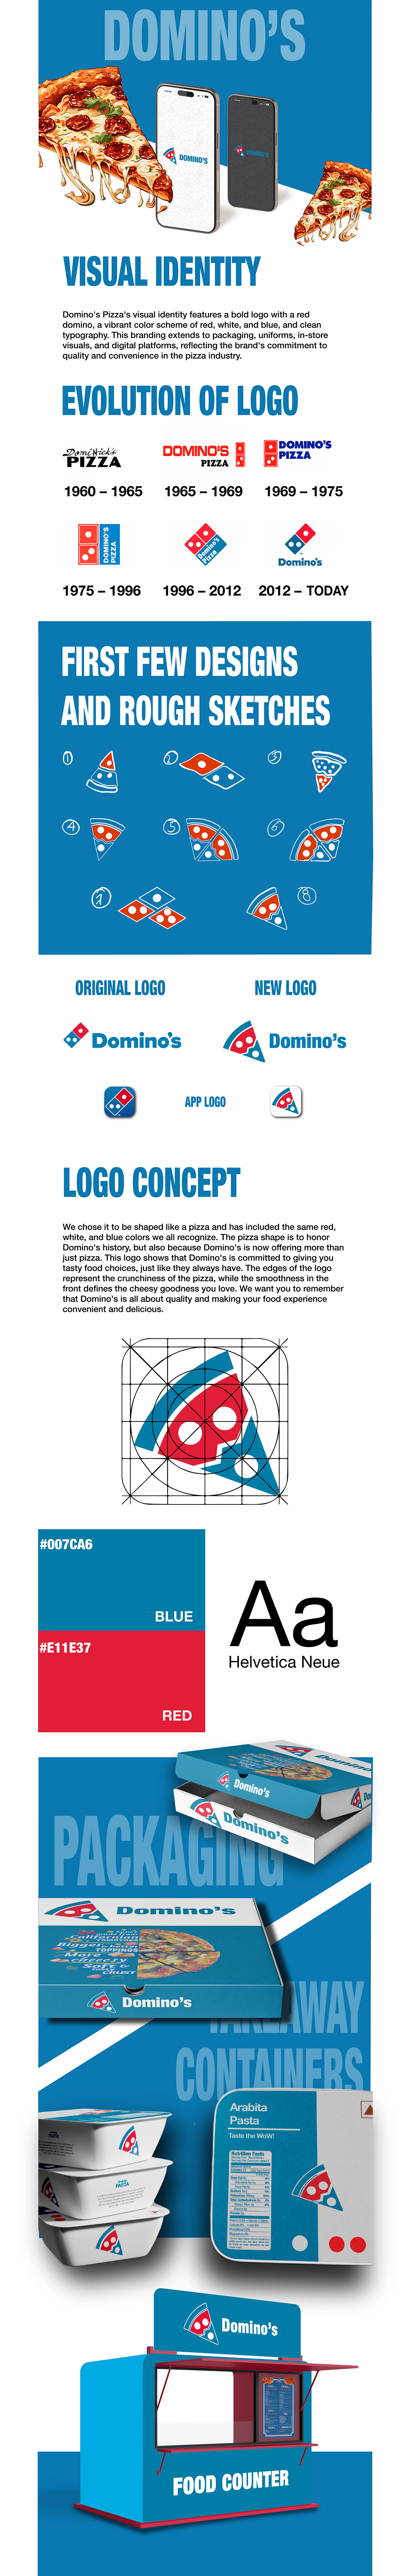 Pizza dominos branding  adobe illustrator Logo Design brand identity Mockup packaging design Advertising  marketing  